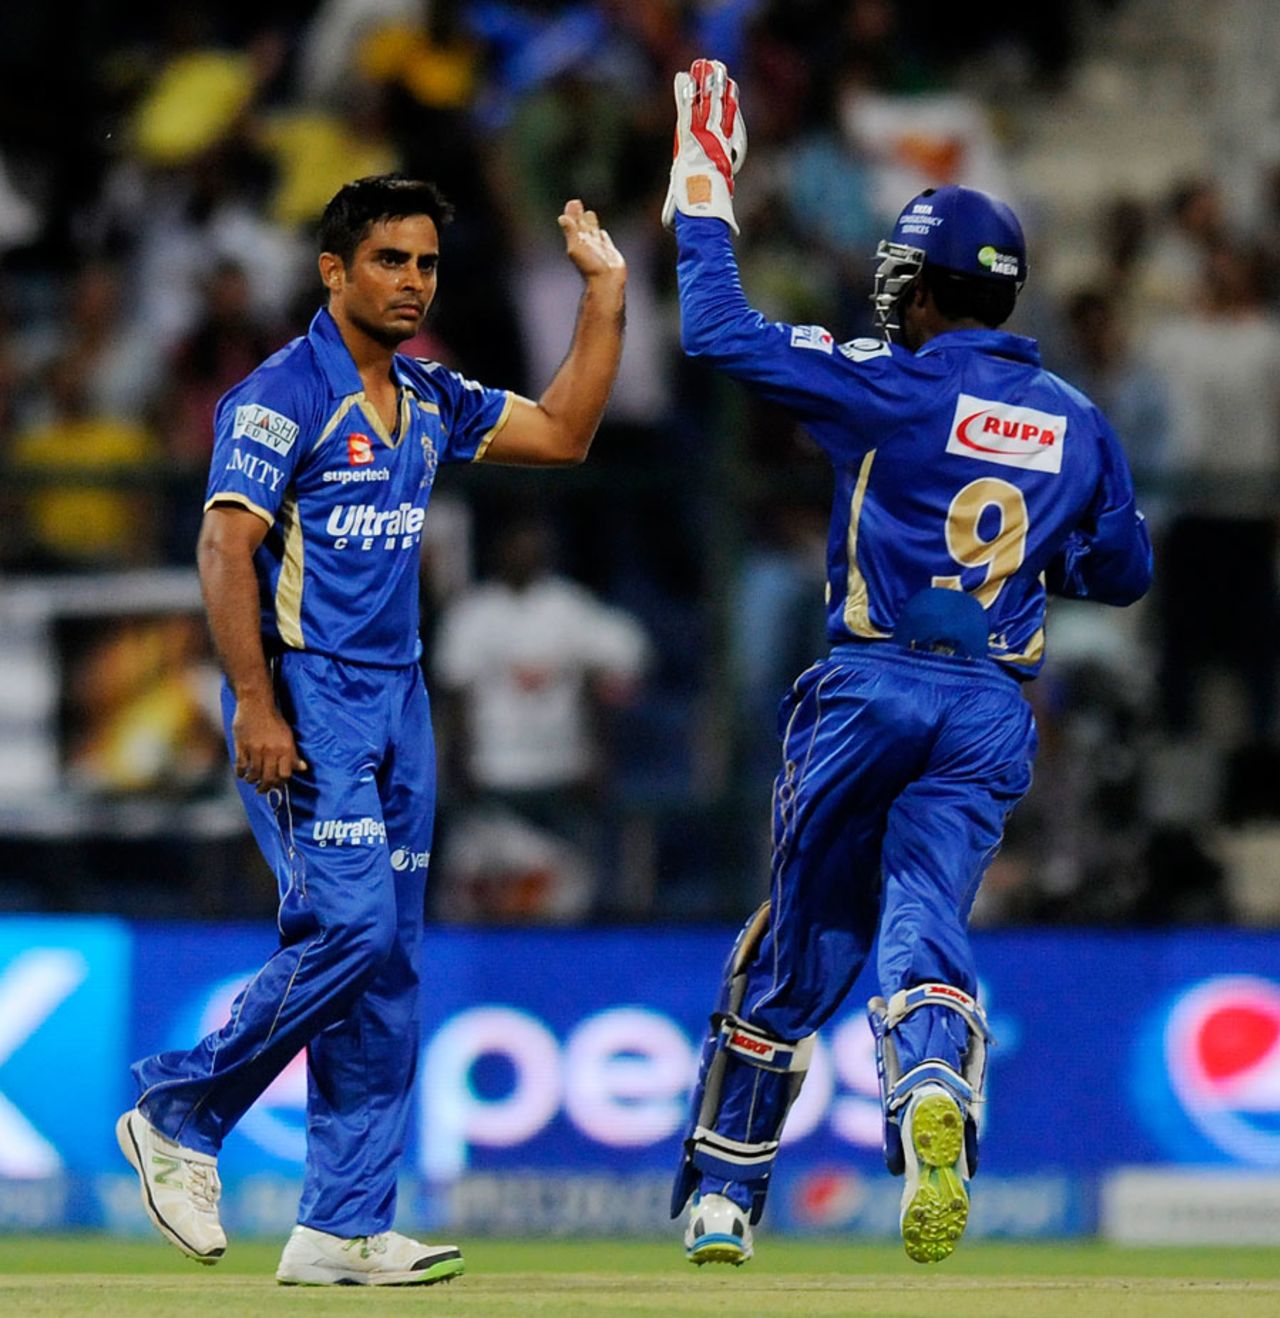 Rajat Bhatia picked up two wickets, Sunrisers Hyderabad v Rajasthan Royals, IPL 2014, Abu Dhabi, April 18, 2014